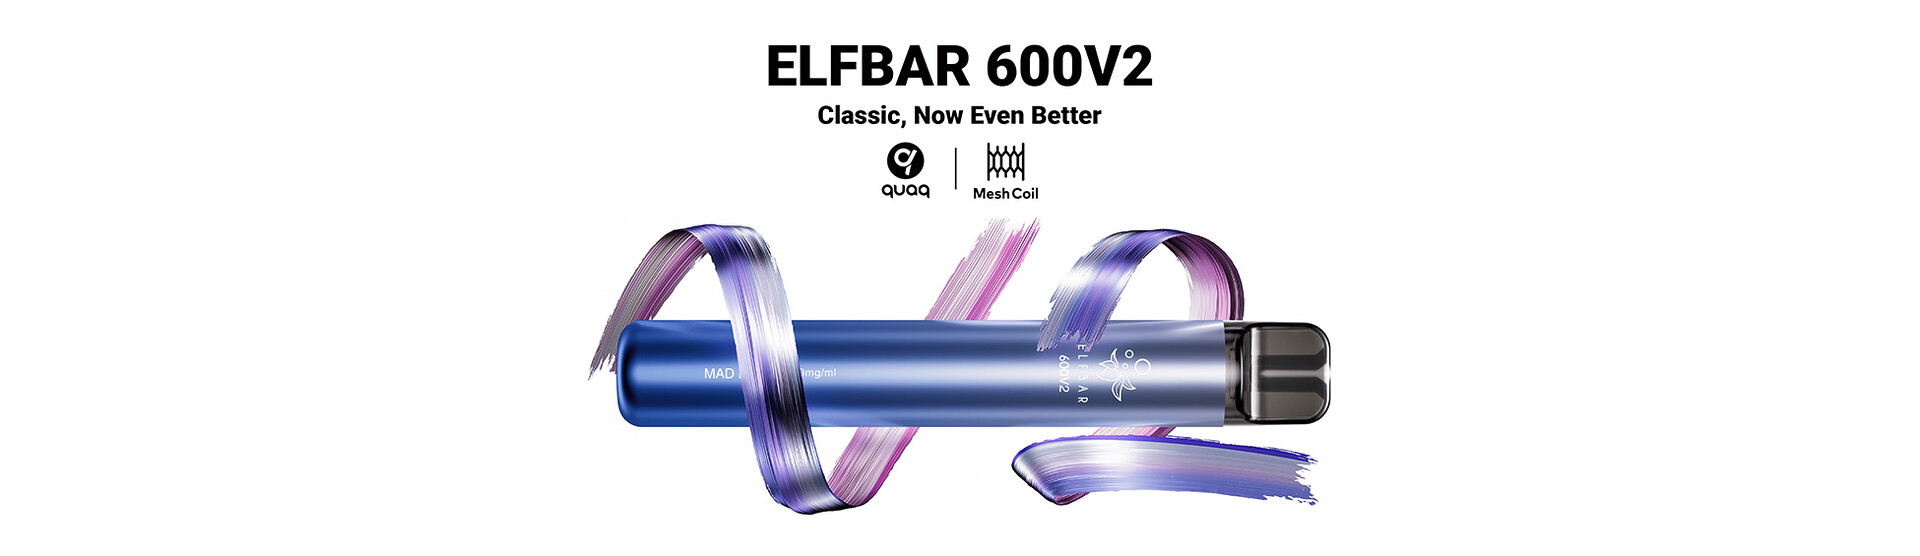 slider nuevo elf bar v2 ya disponible en vapori.es